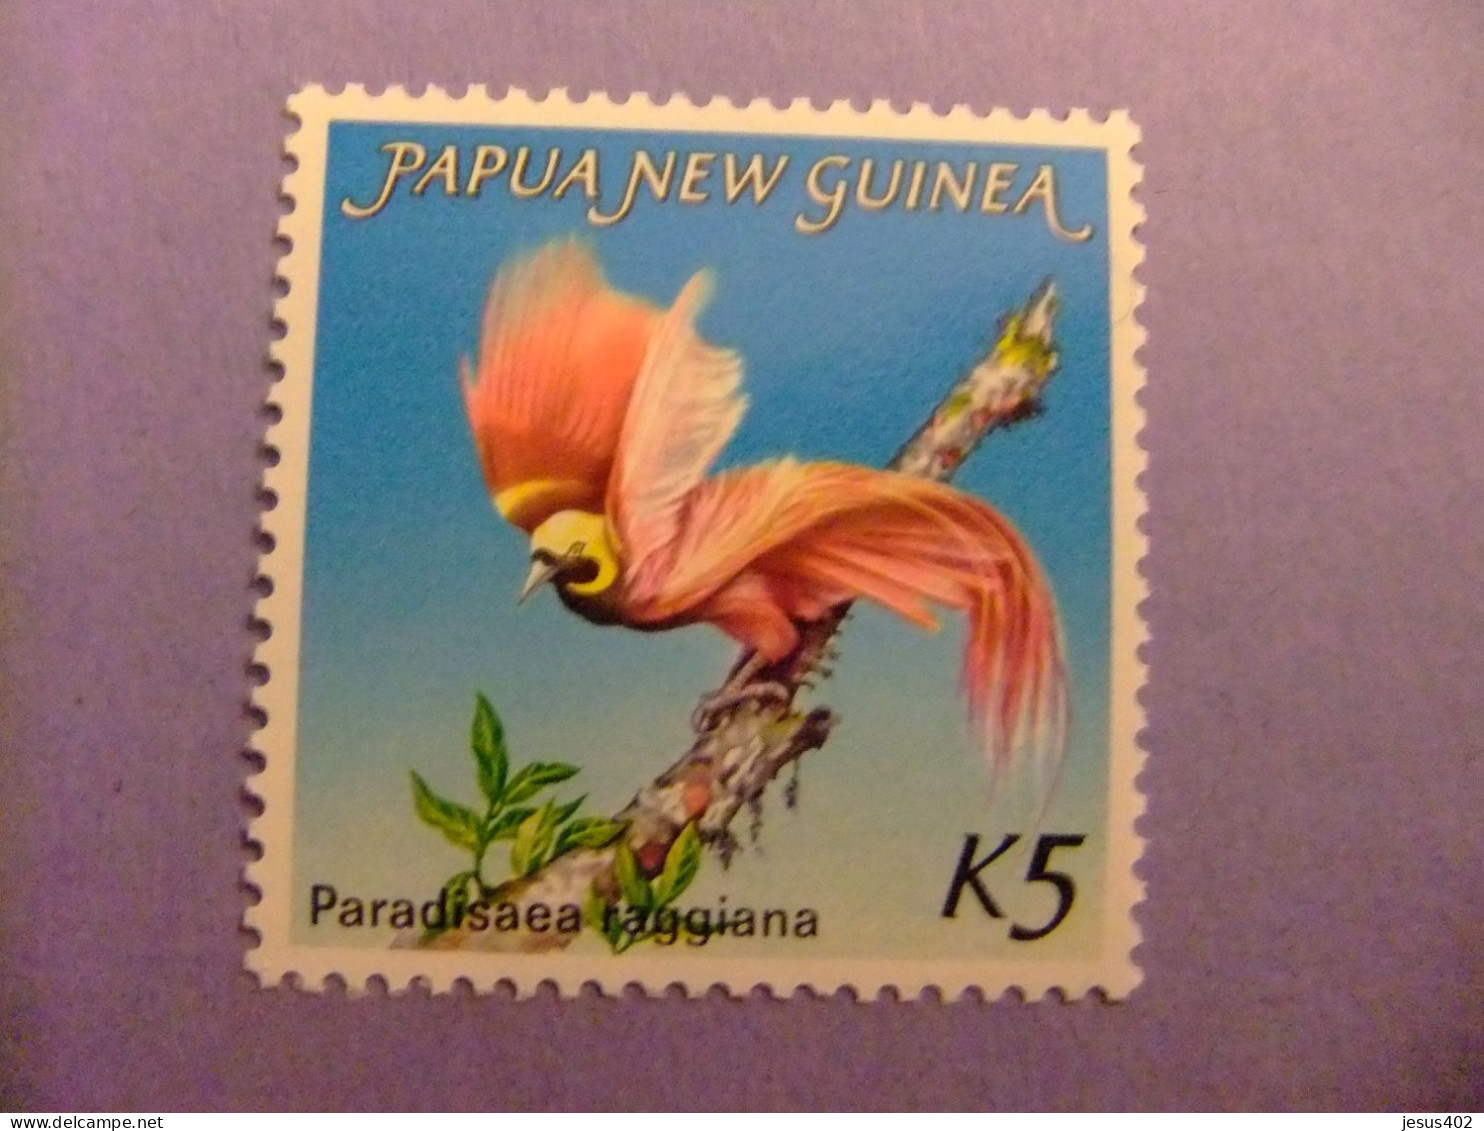 52 PAPUA NEW GUINEA / NUEVA GUINEA 1984 / PARADISAEA RAGGIANA / YVERT 477 MNH - Galline & Gallinaceo